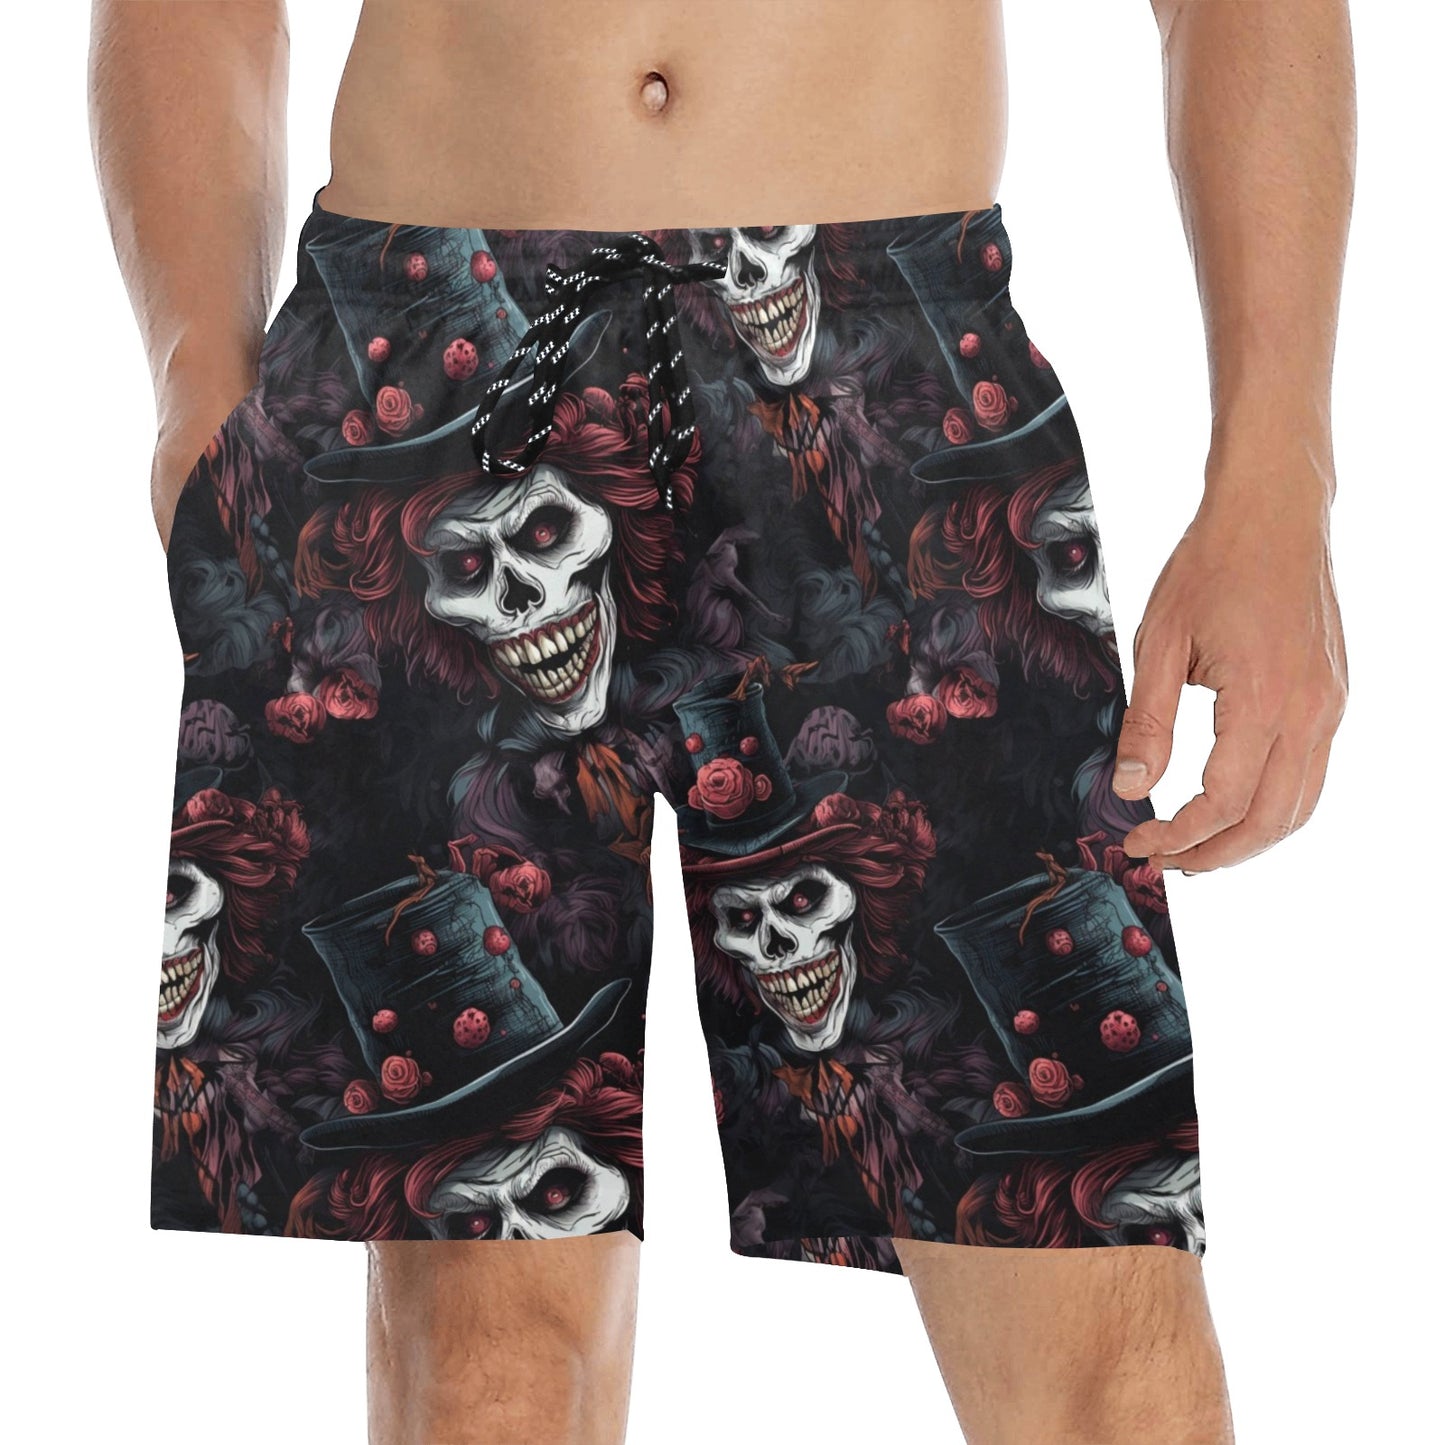 Sinister Skull Beach Shorts